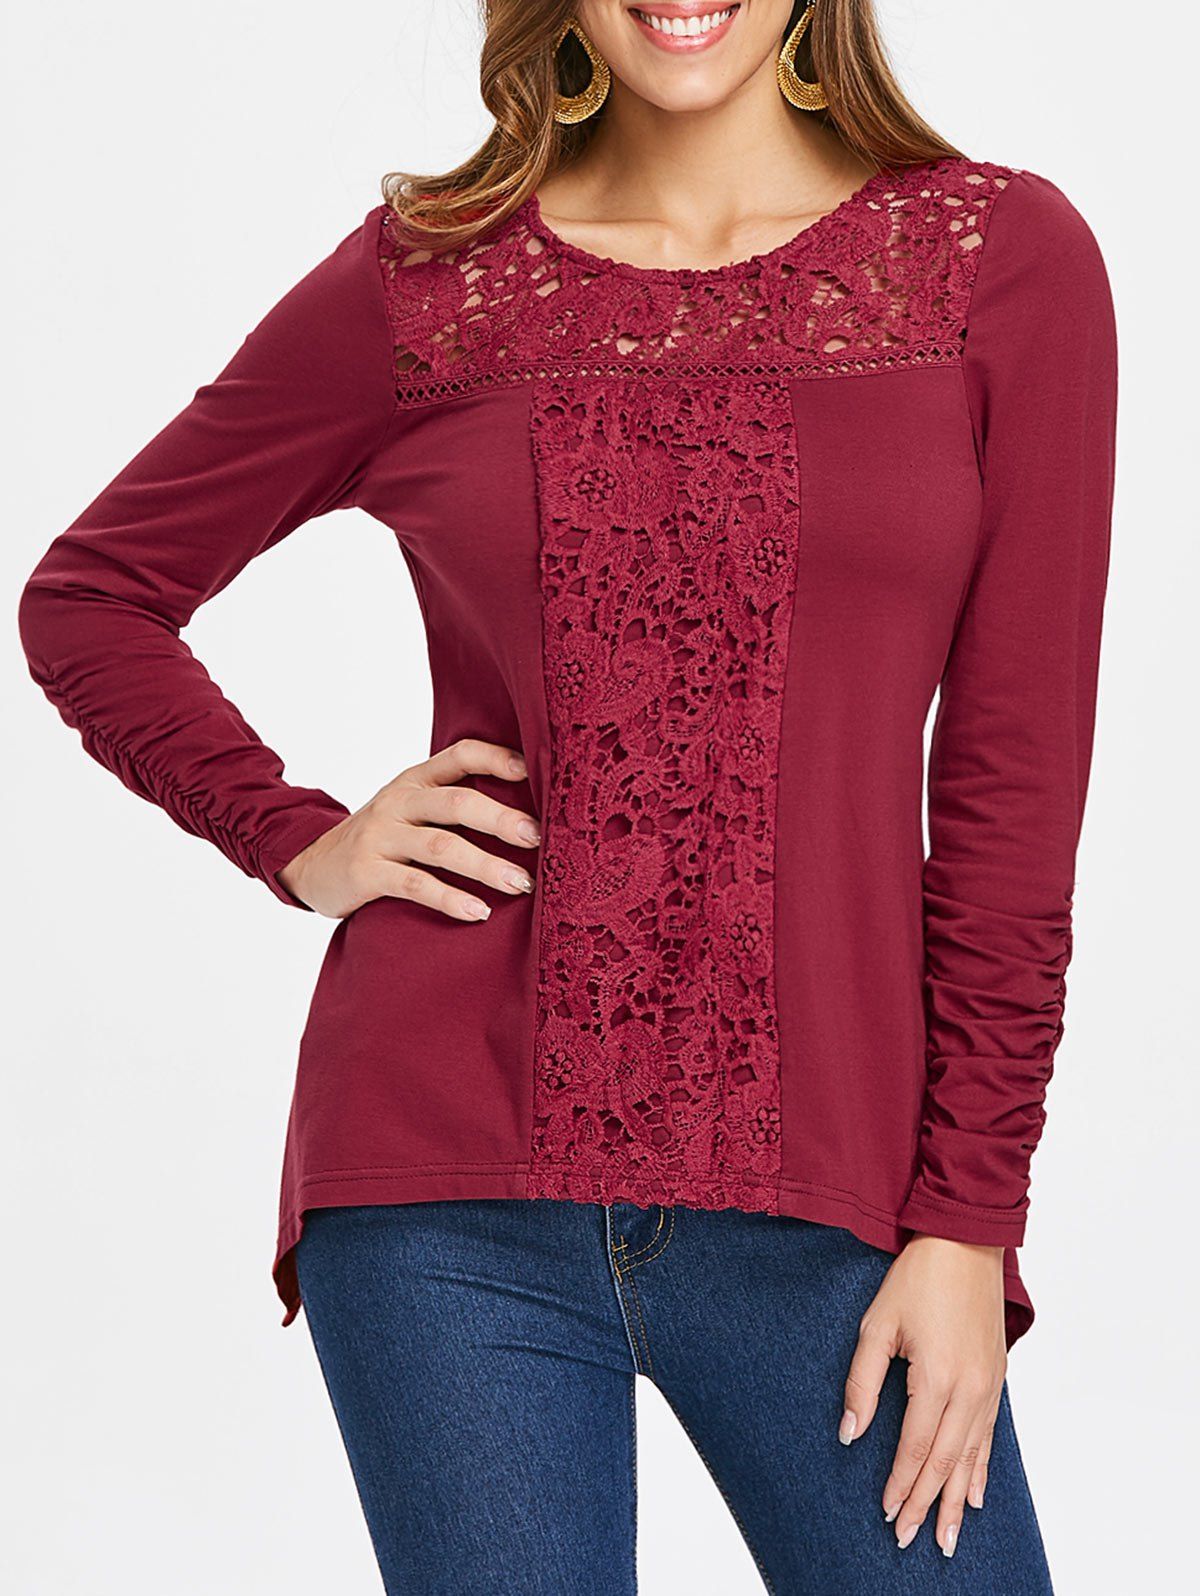 Lace Applique Asymmetrical T-shirt - RED WINE S